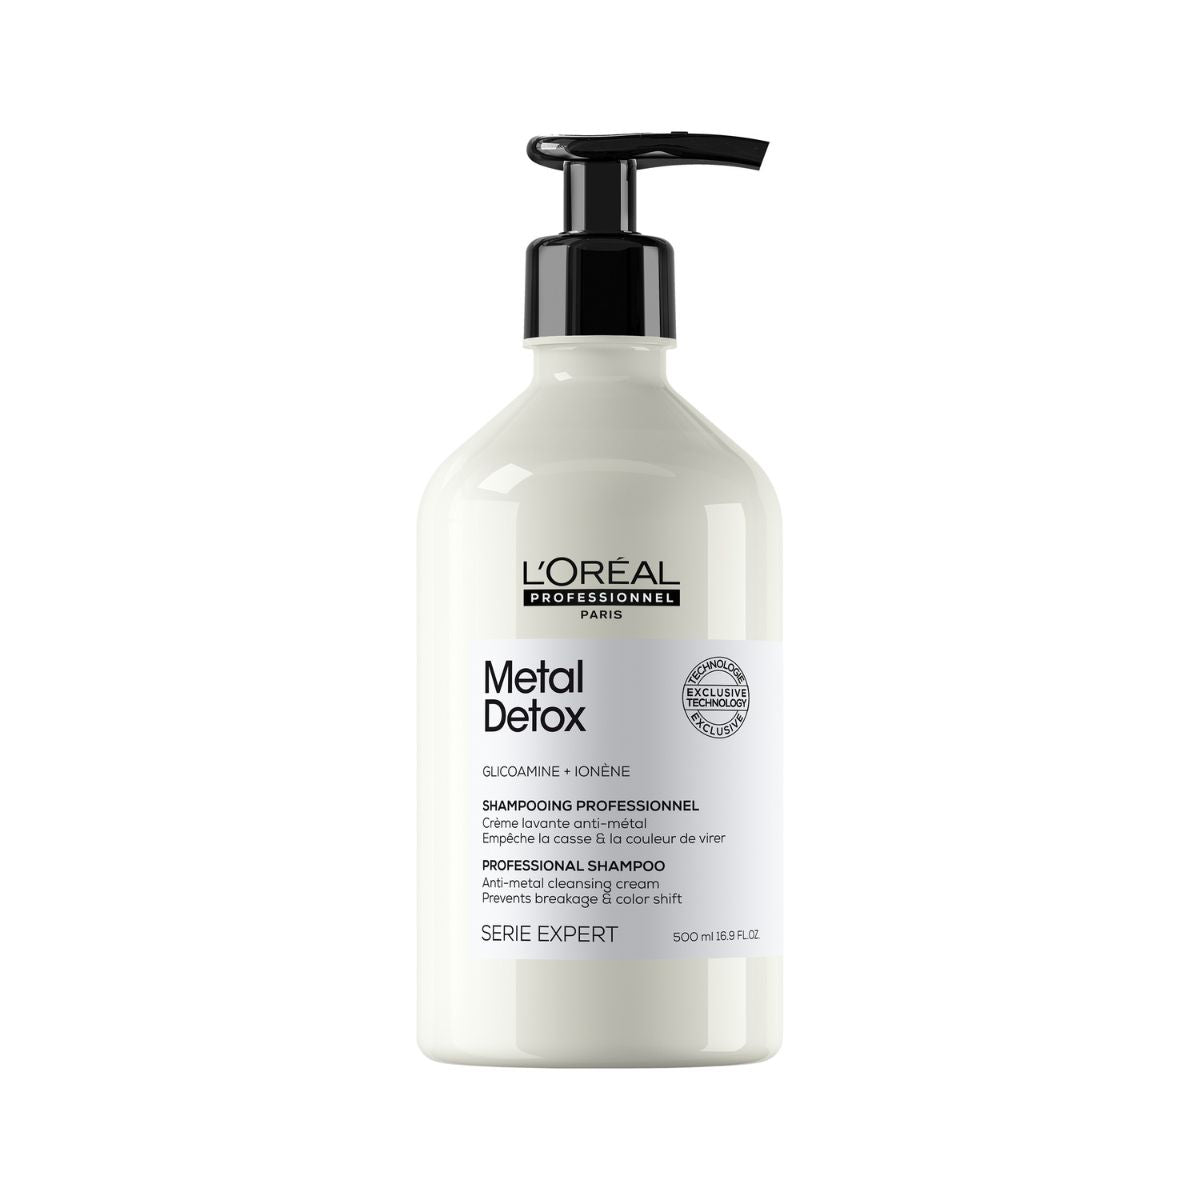 L’Oreal Professionnel Metal Detox shampoo 500ml